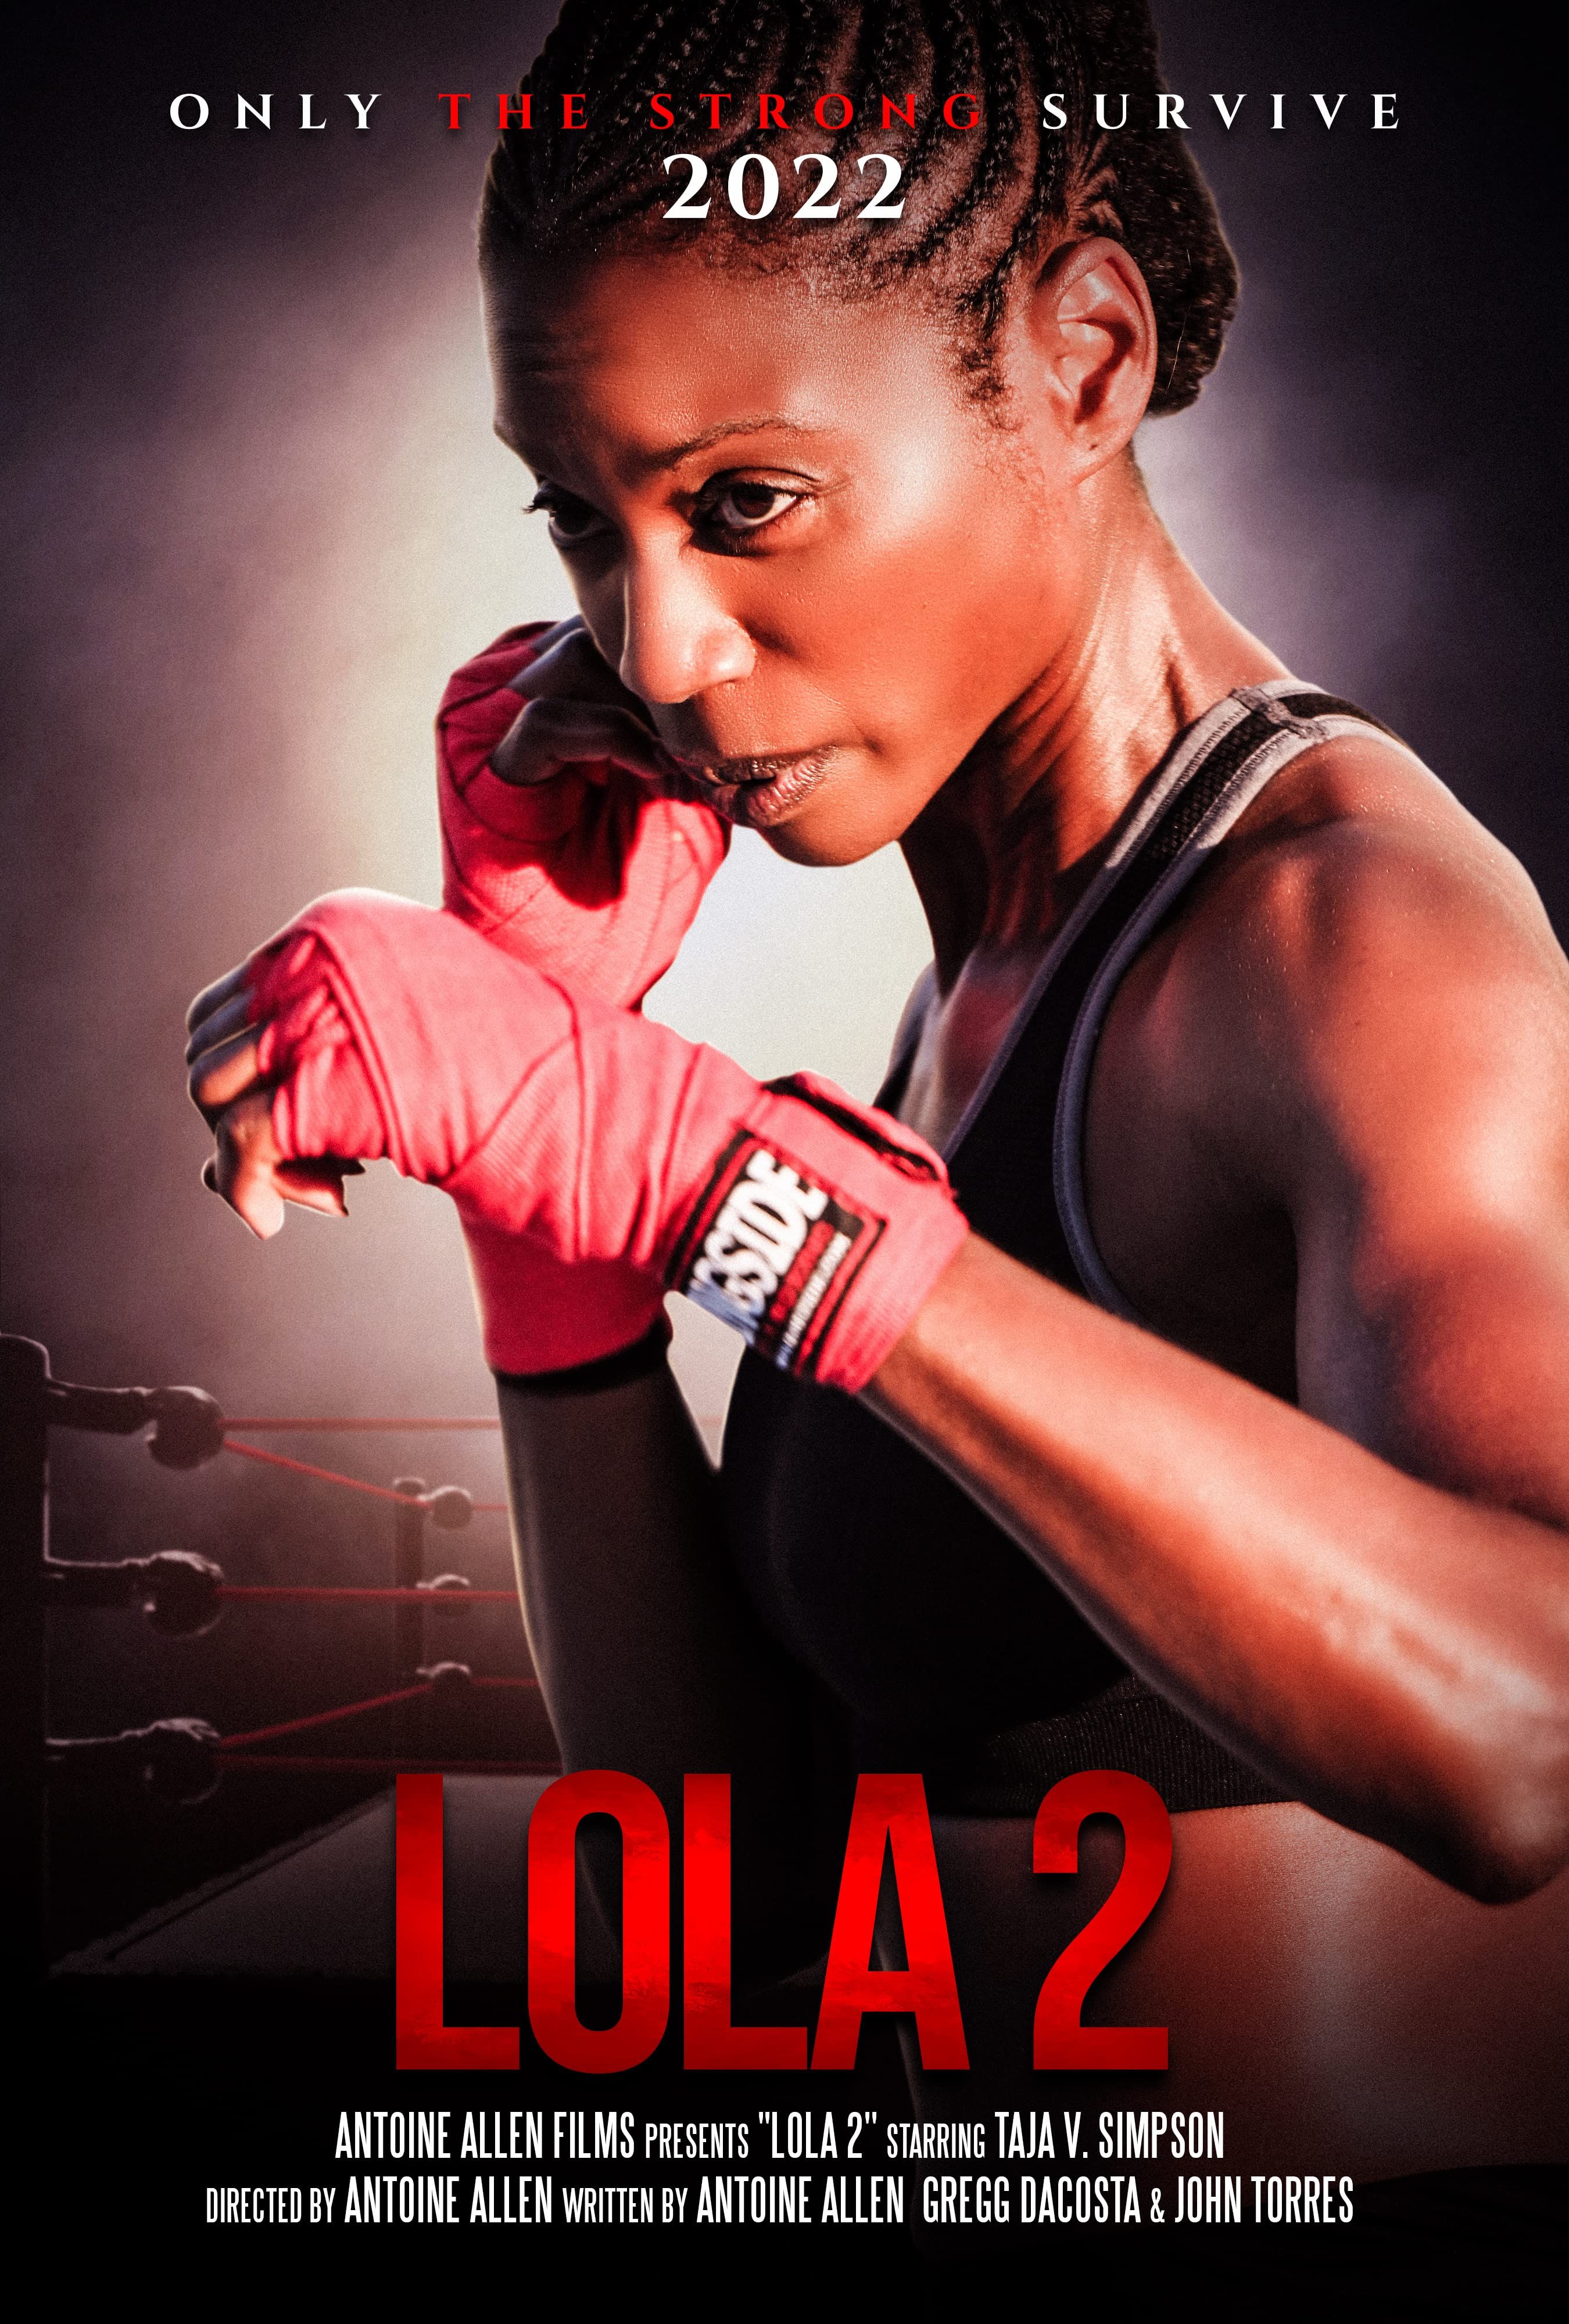 Lola 2 (2022) English HDRip download full movie